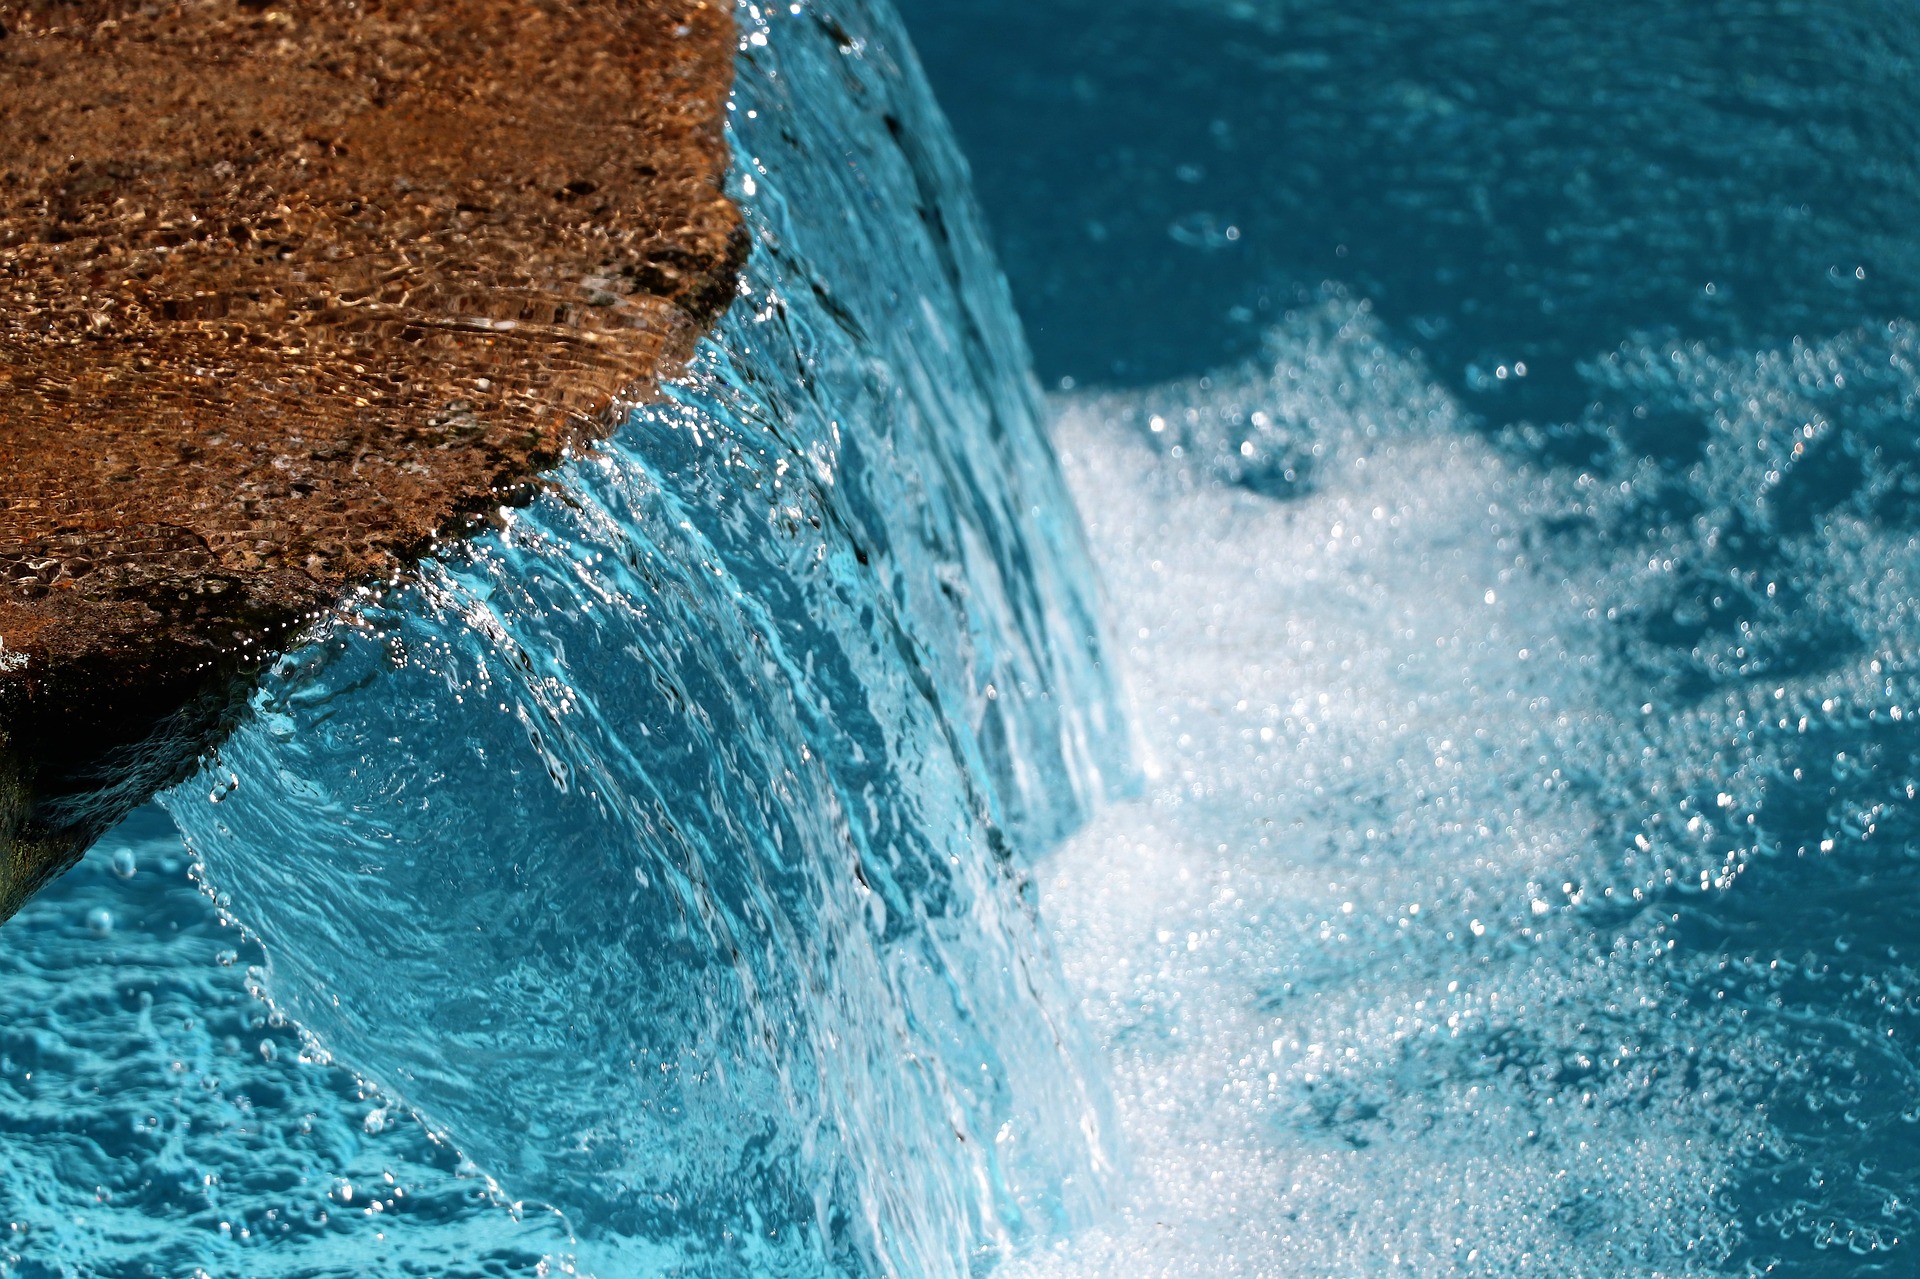 Океан море водопад. Голубой водопад. Водопад с голубой водой. Океанский водопад. Вода источник жизни фото.